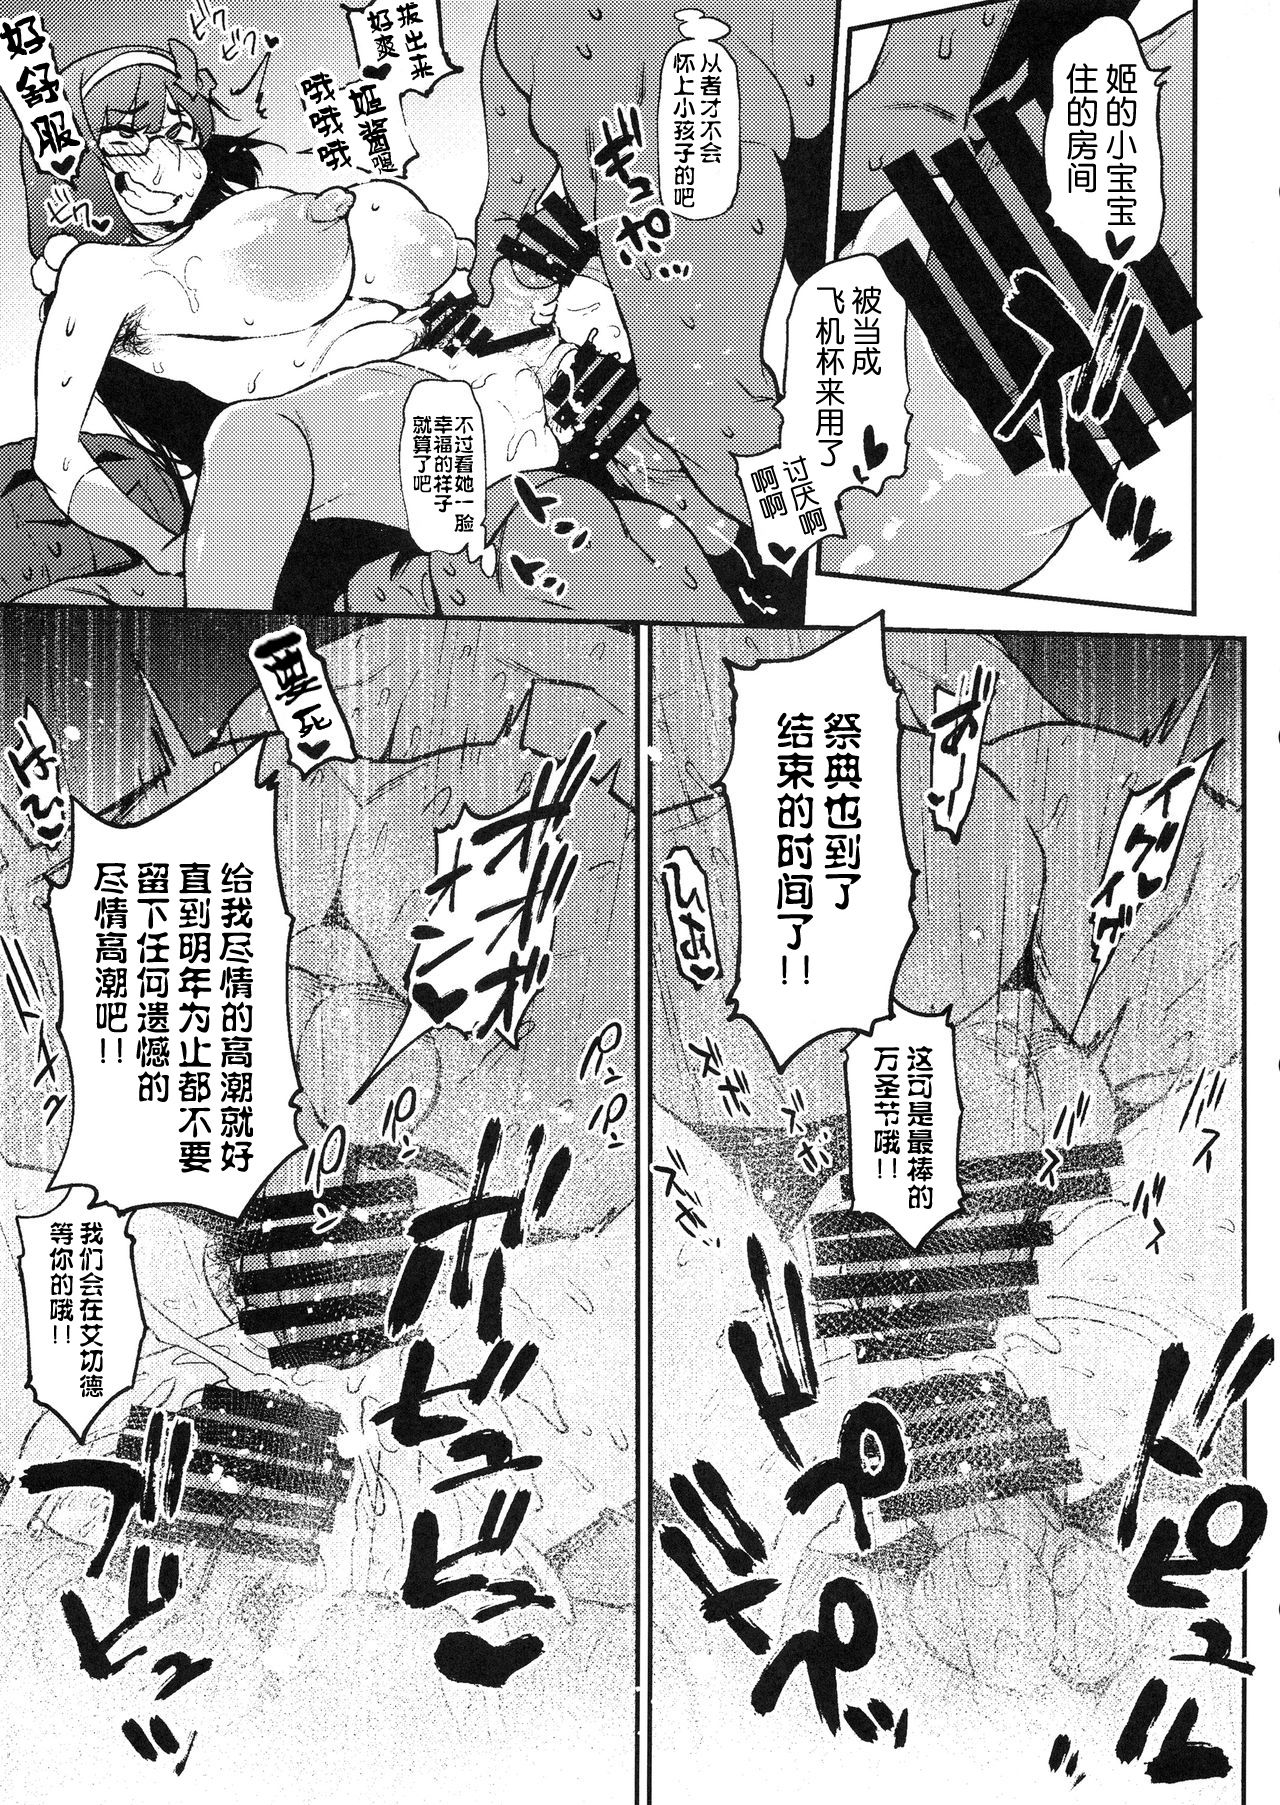 (COMIC1☆14) [雪陽炎 (KANZUME)] TRIP or TREATMENT (Fate/Grand Order) [中国翻訳]